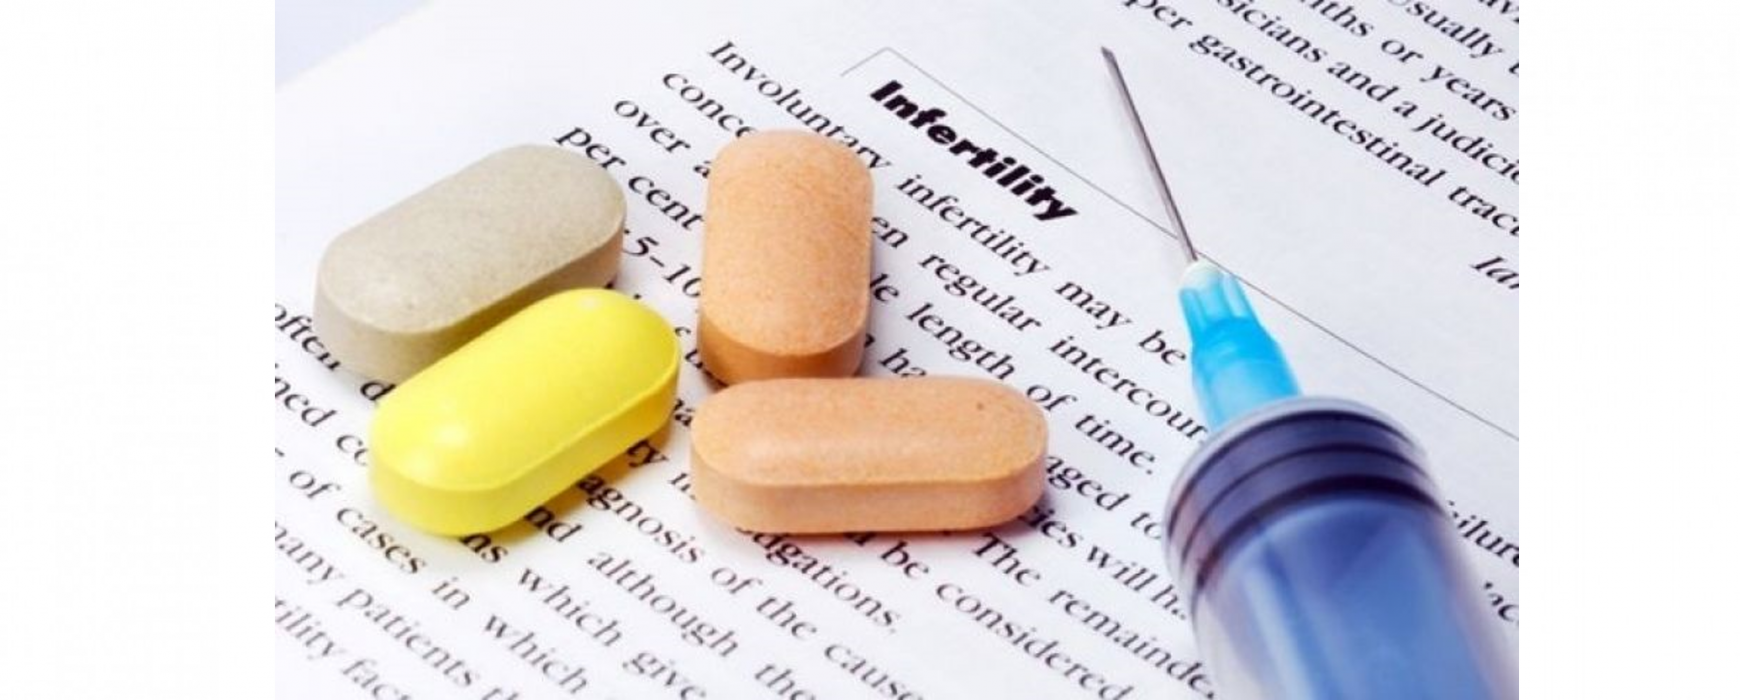 pills and medication